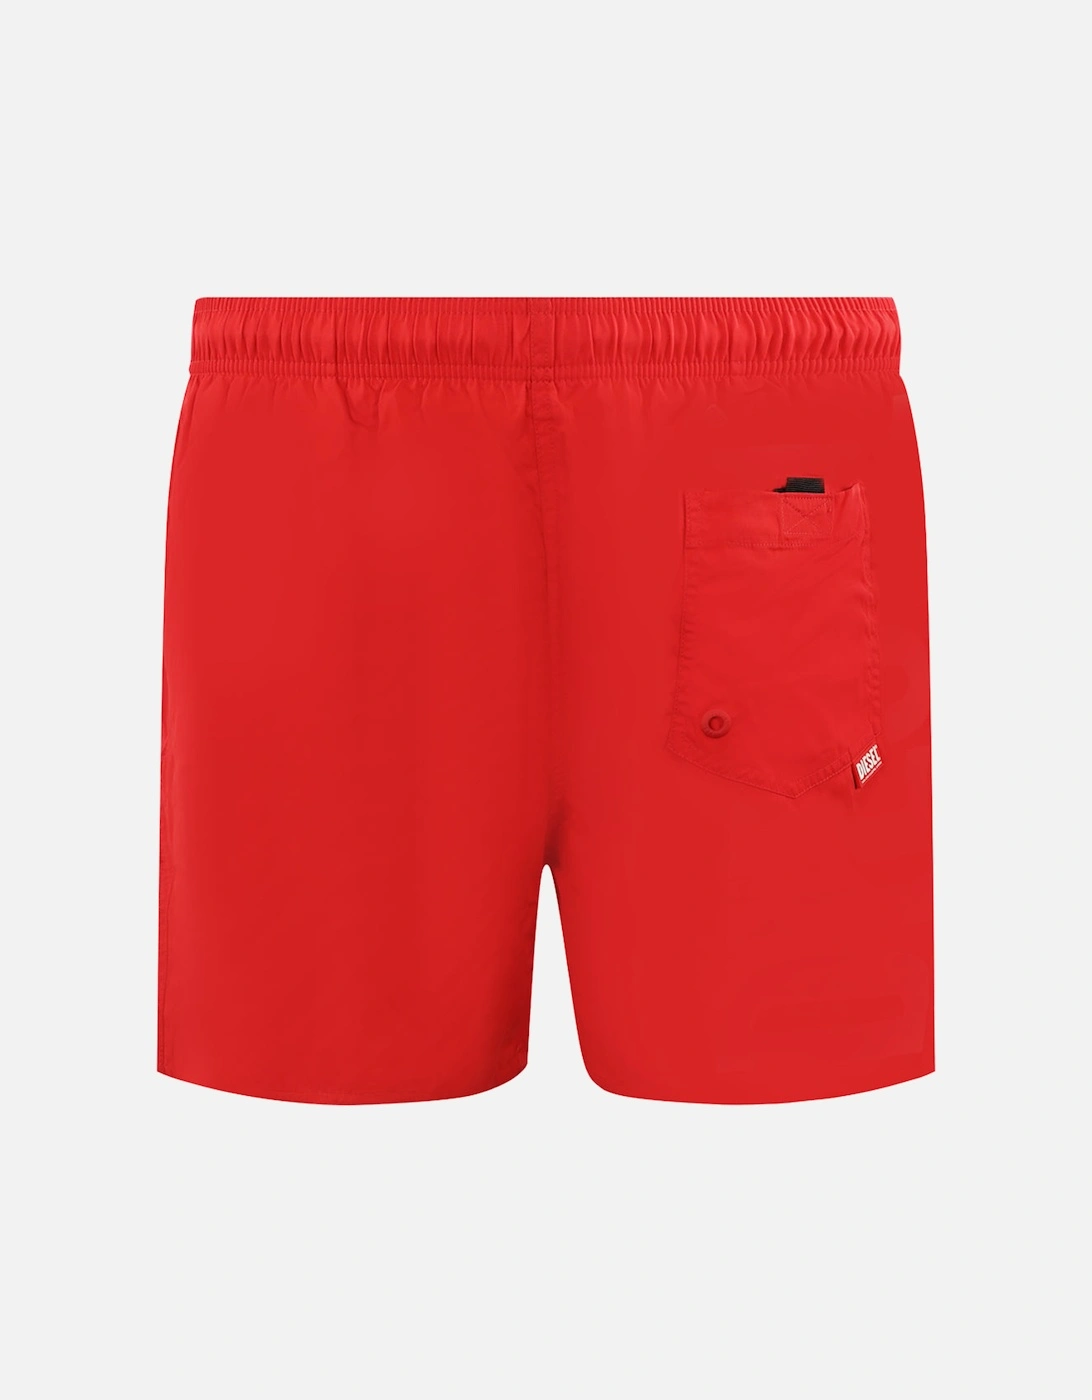 BMBX-WAVE-WF Red Swim Shorts